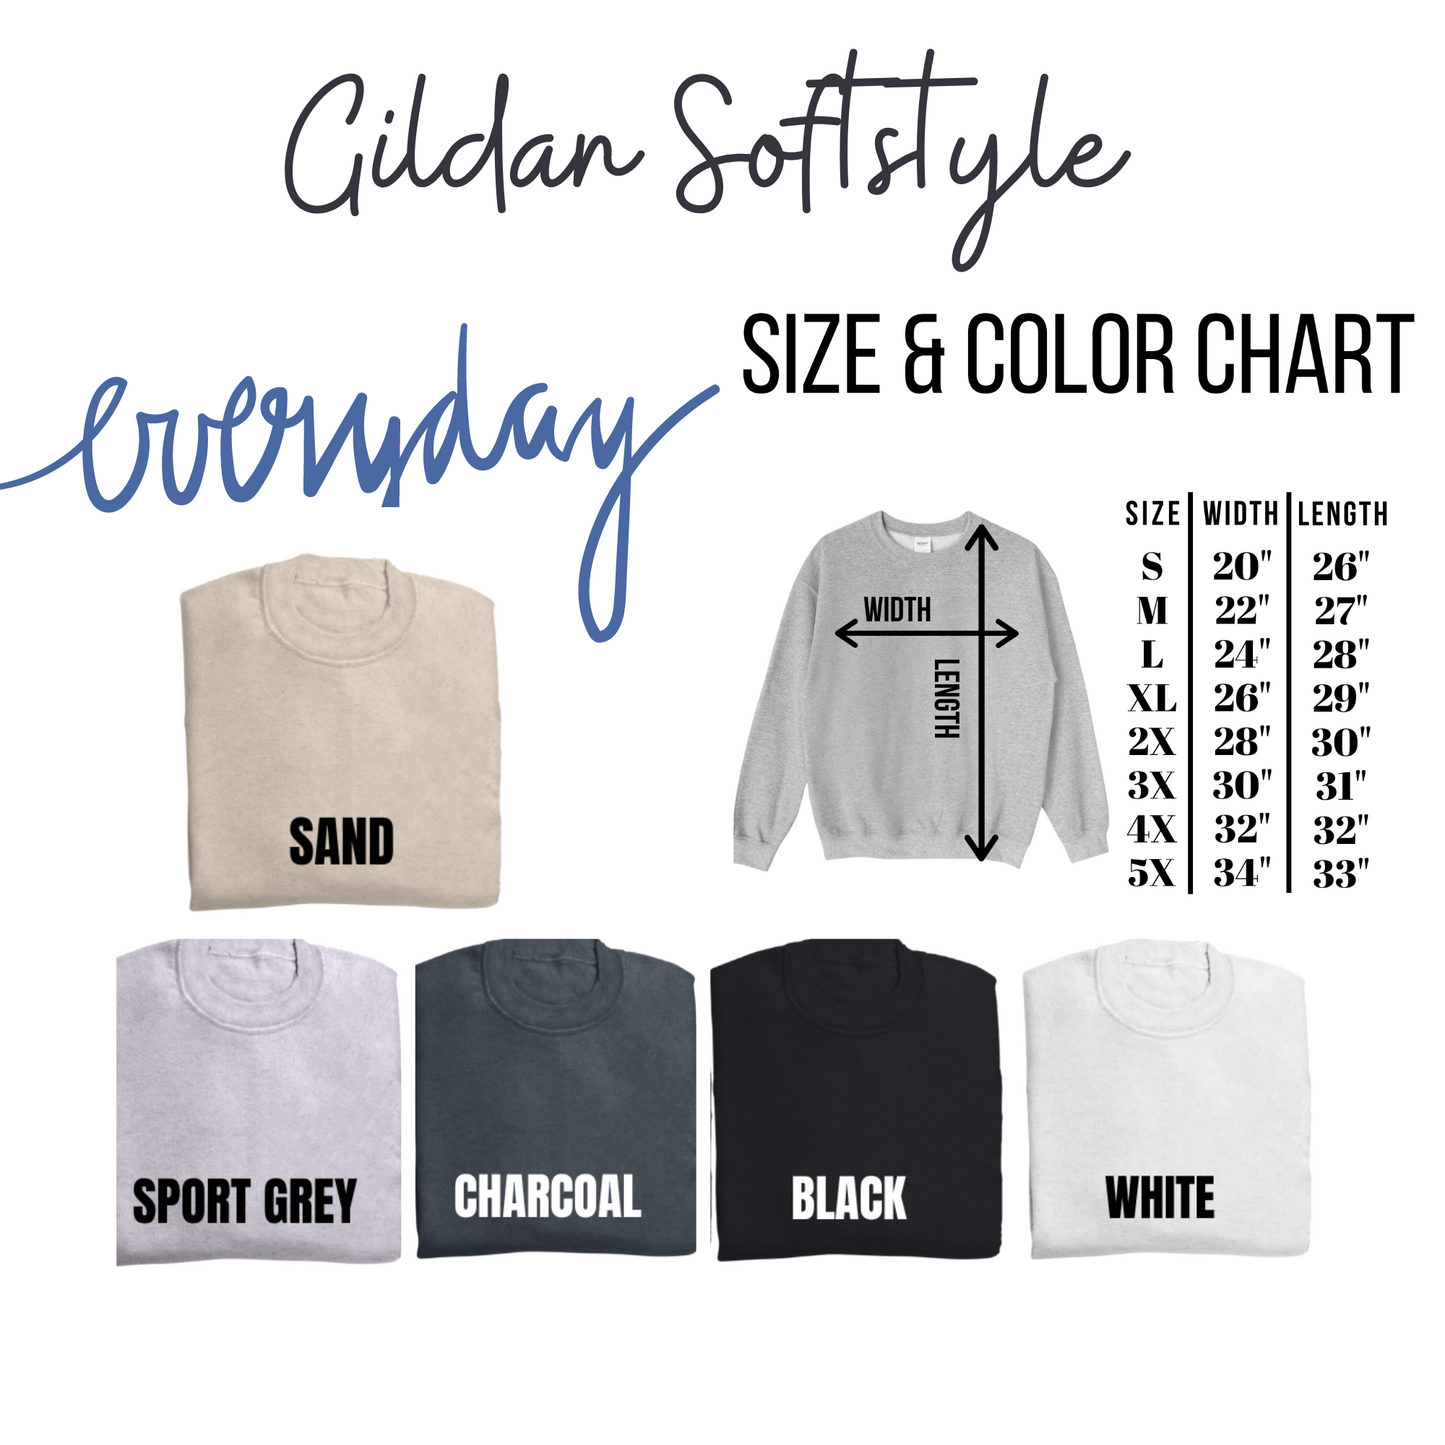 All The Good Ones Gildan Softstyle Crewneck or Tshirt